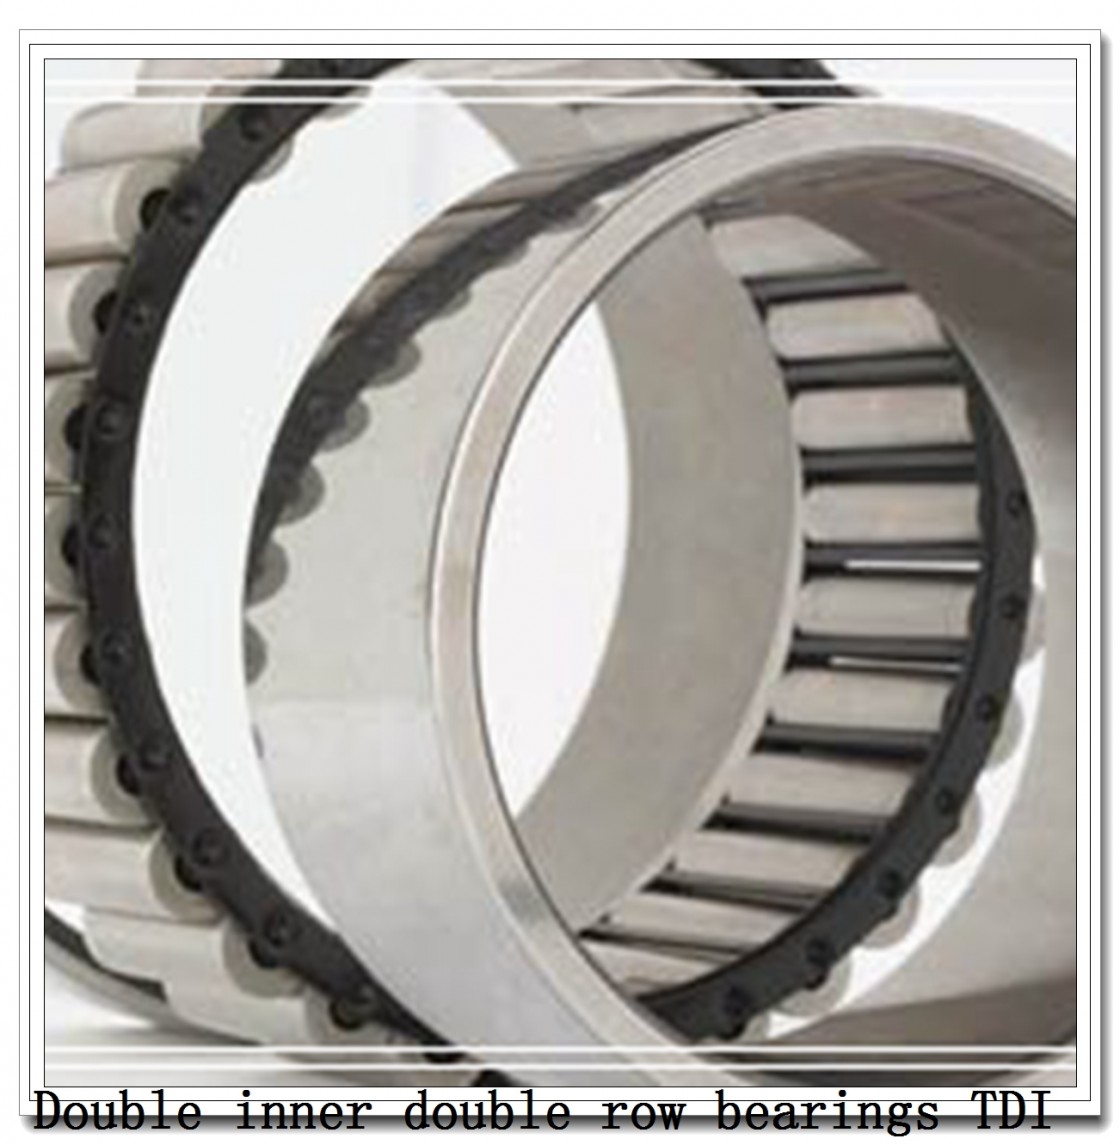 515TDO720-1 Double inner double row bearings TDI